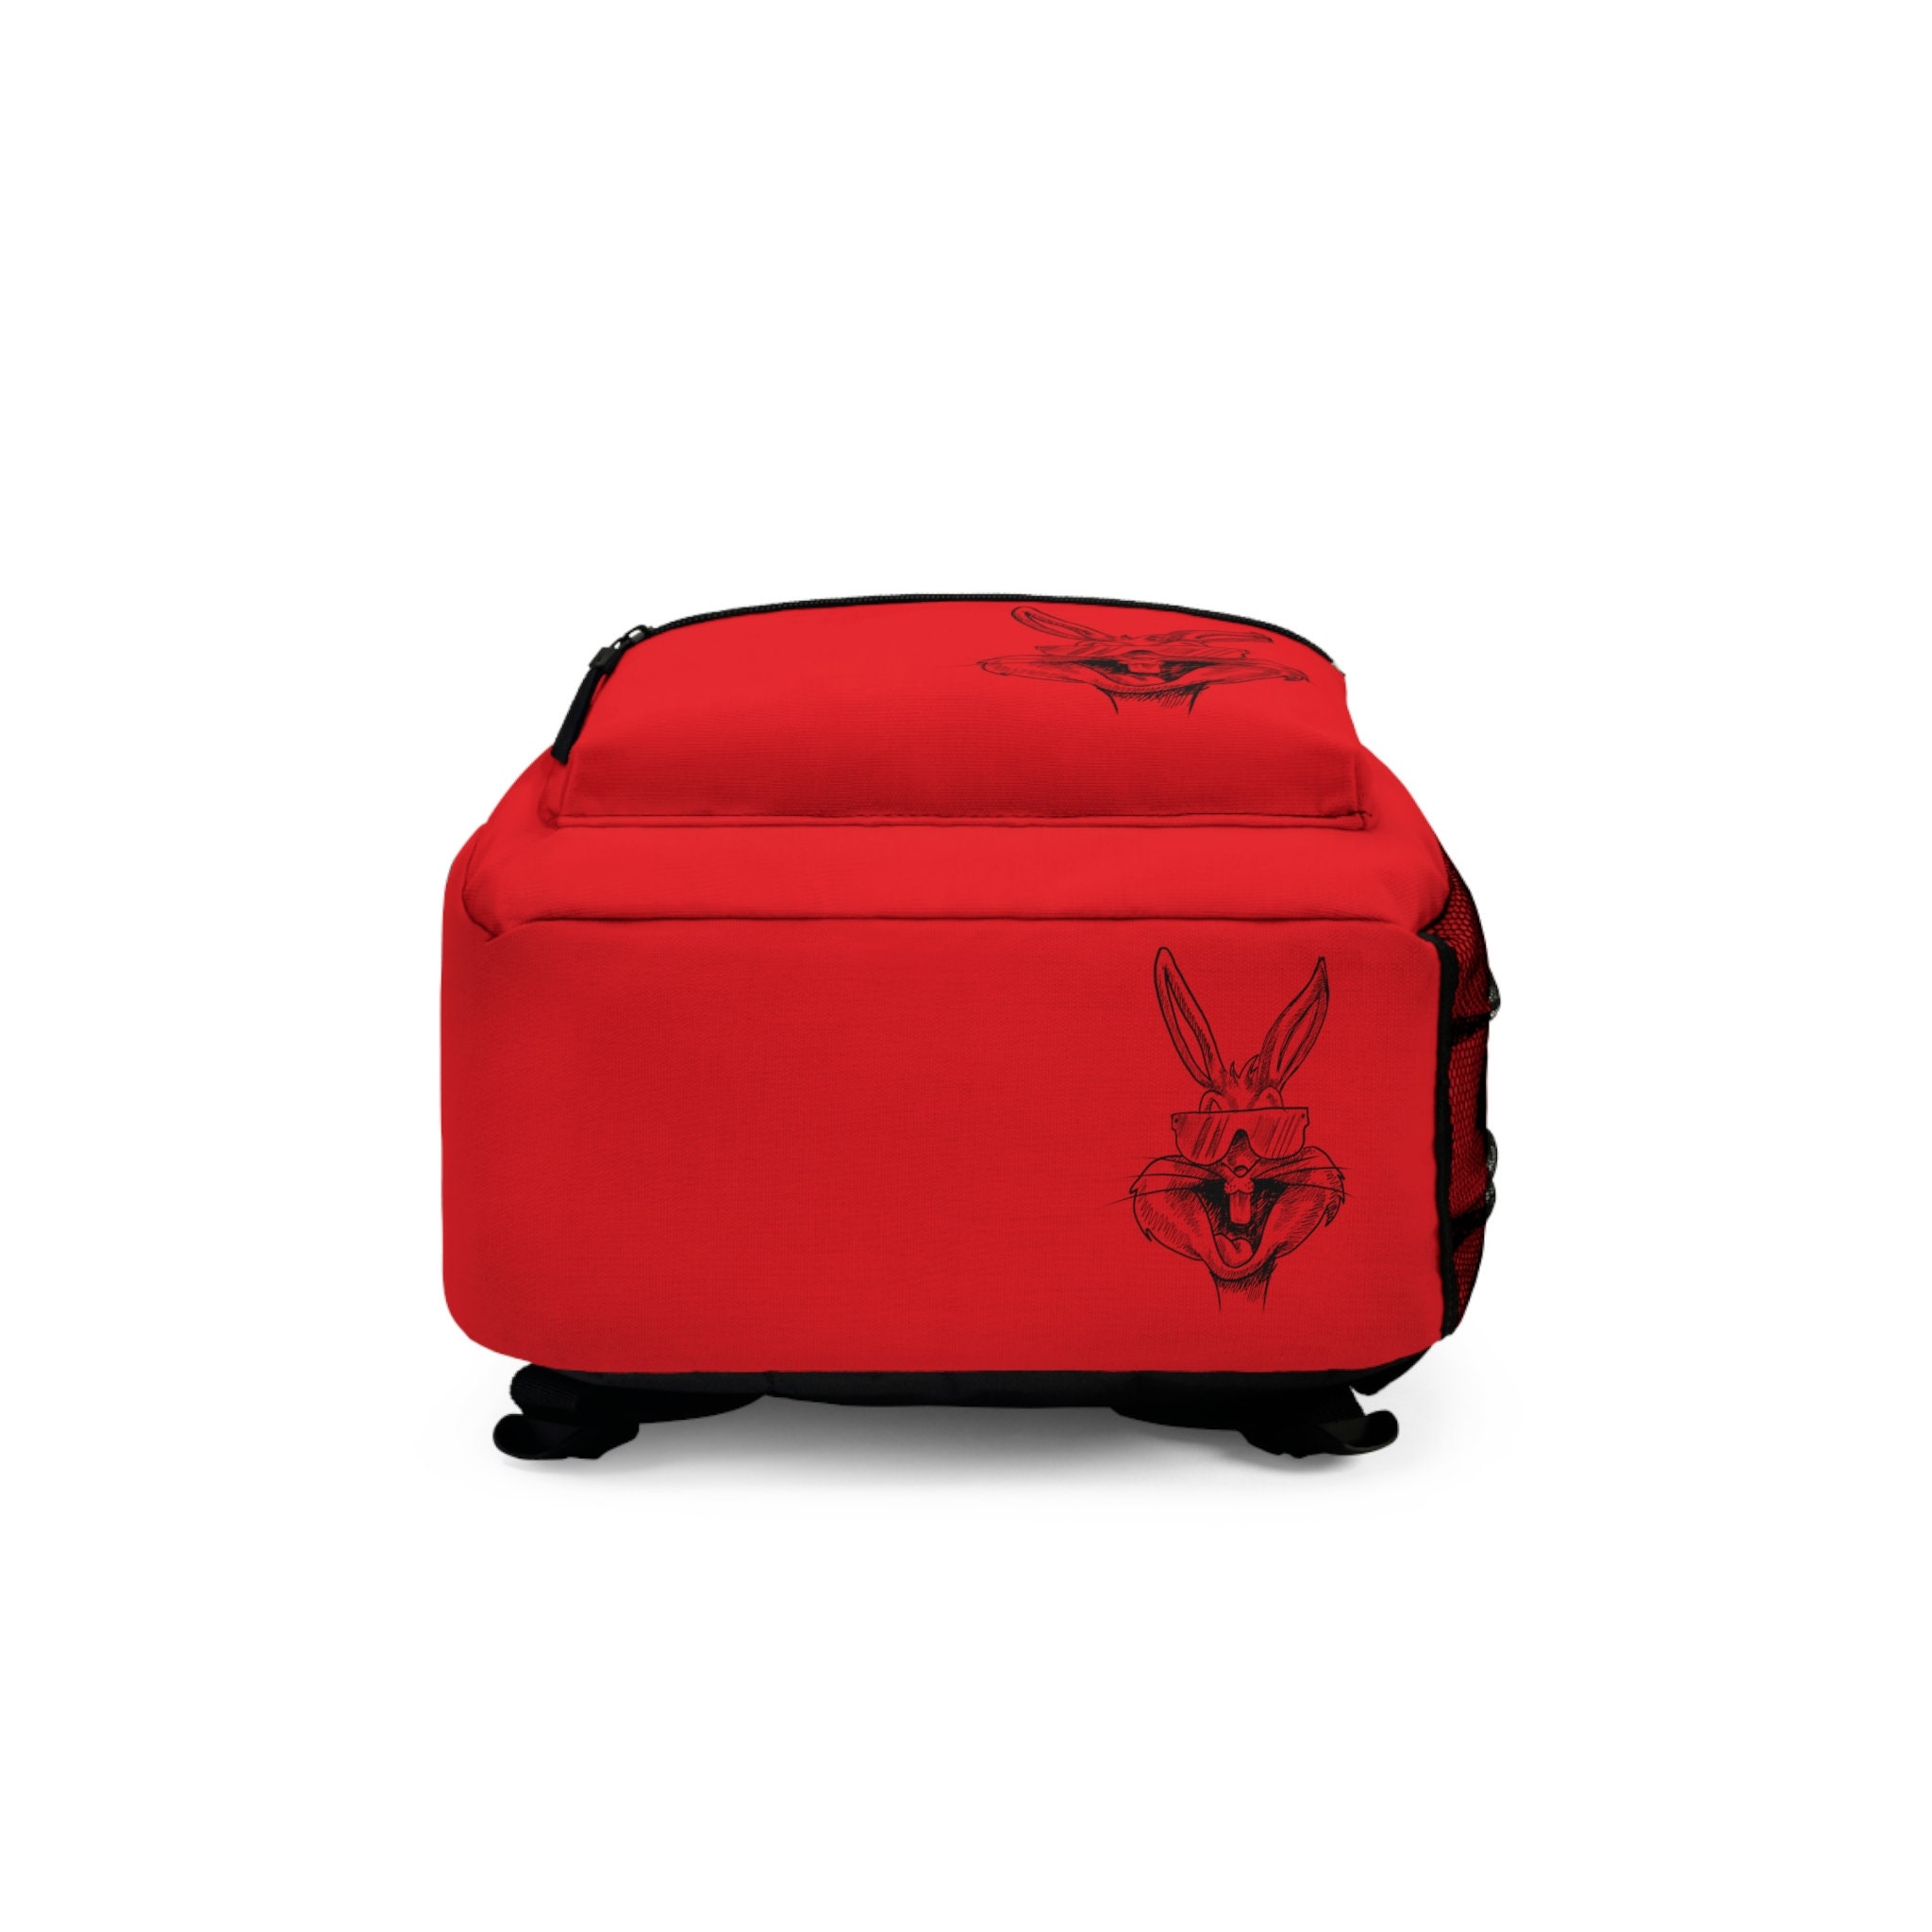 Cool Bugs Bunny Red Gift Backpack, Basketball Gray Bag